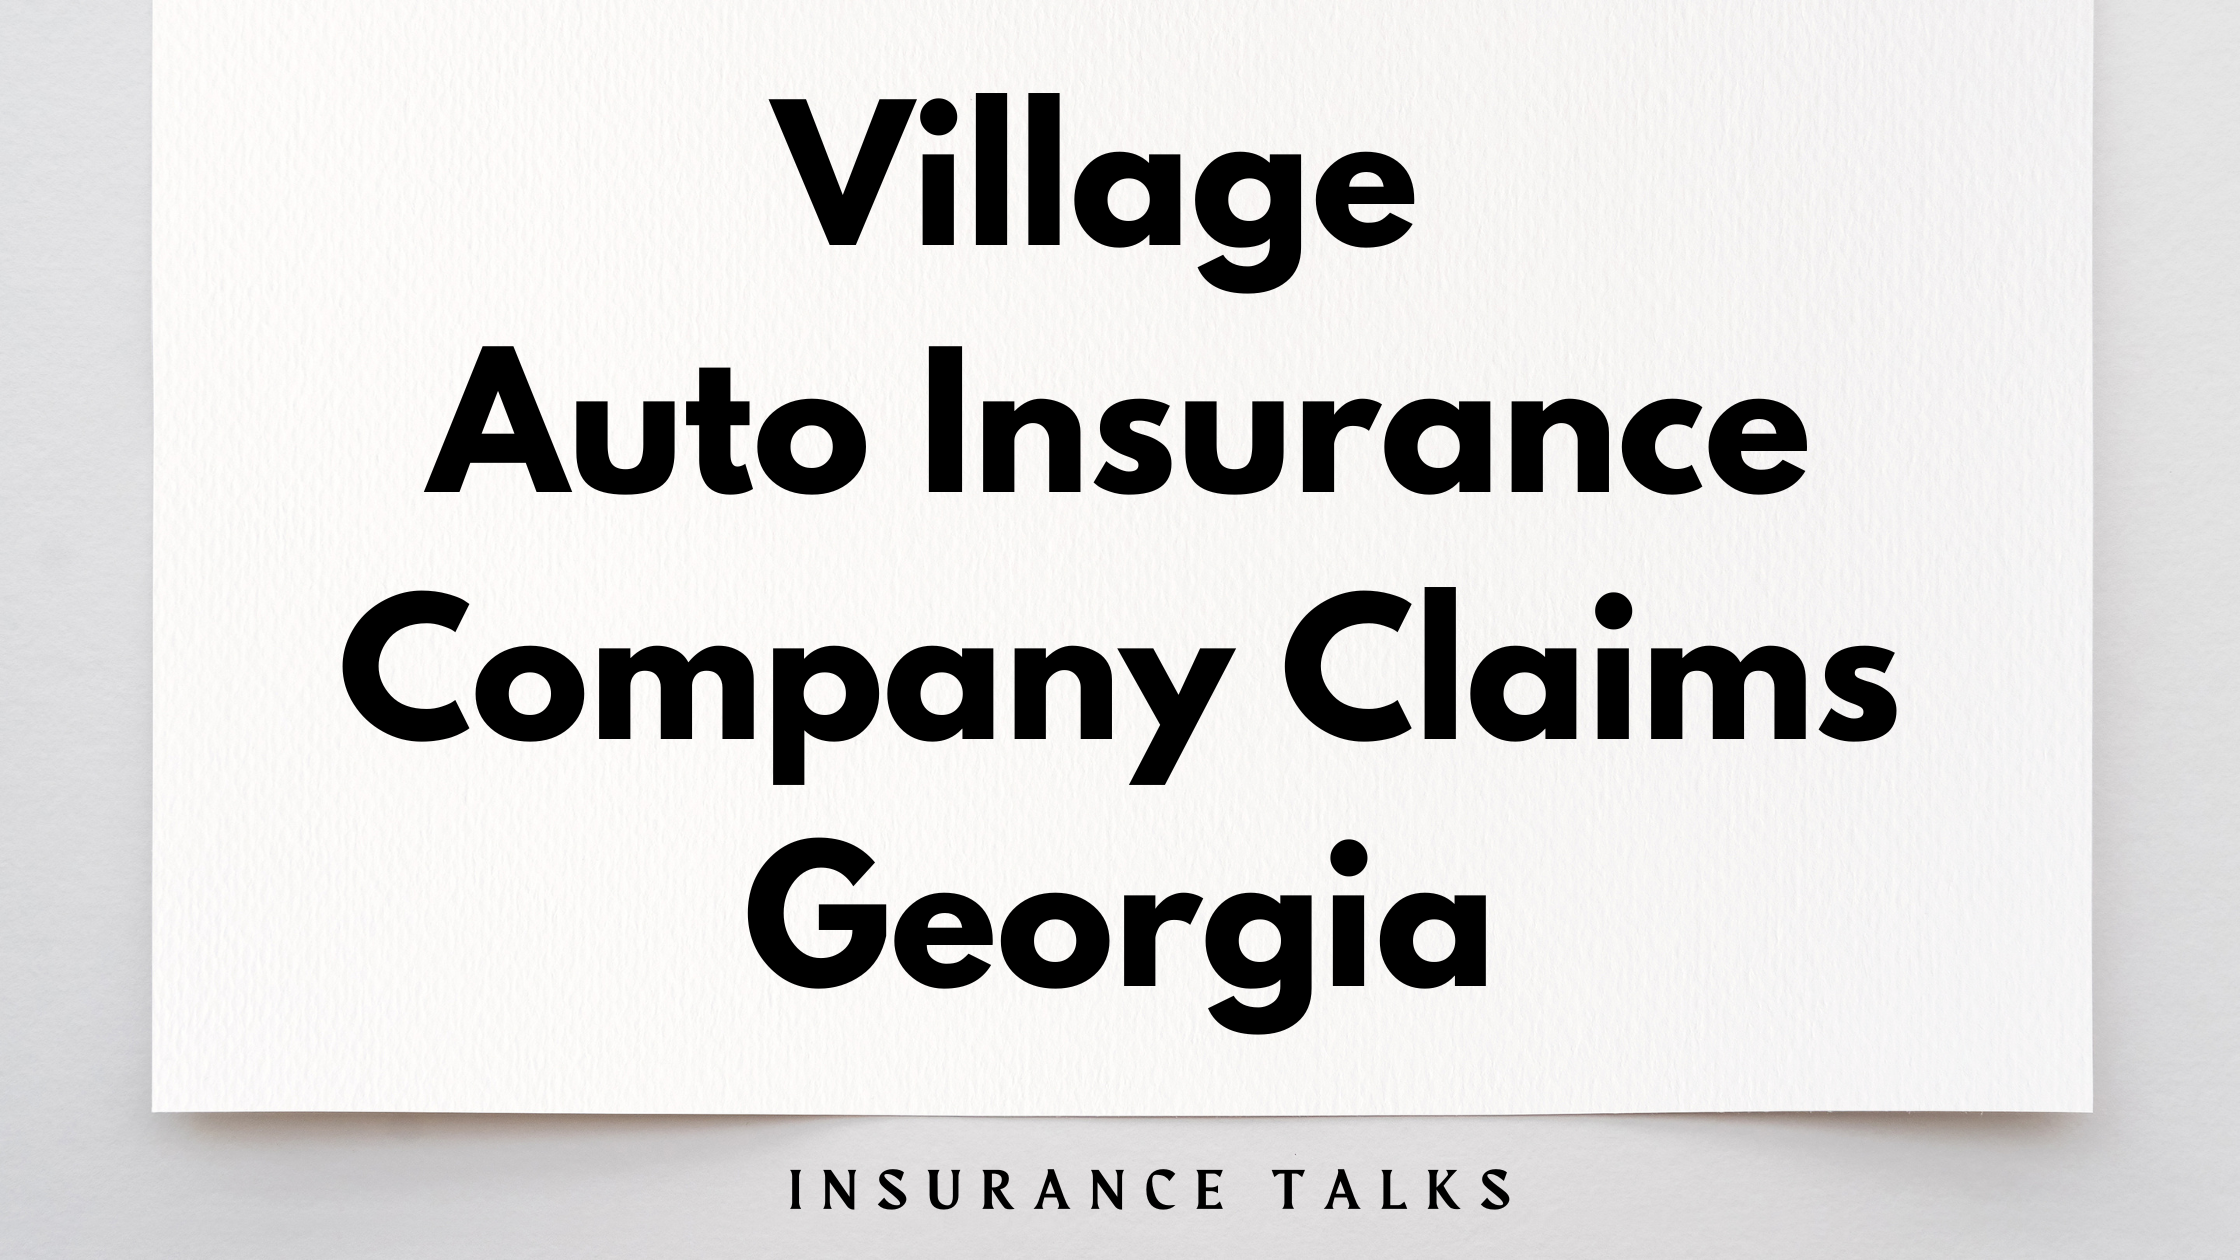 Village Auto Insurance Company Claims Georgia